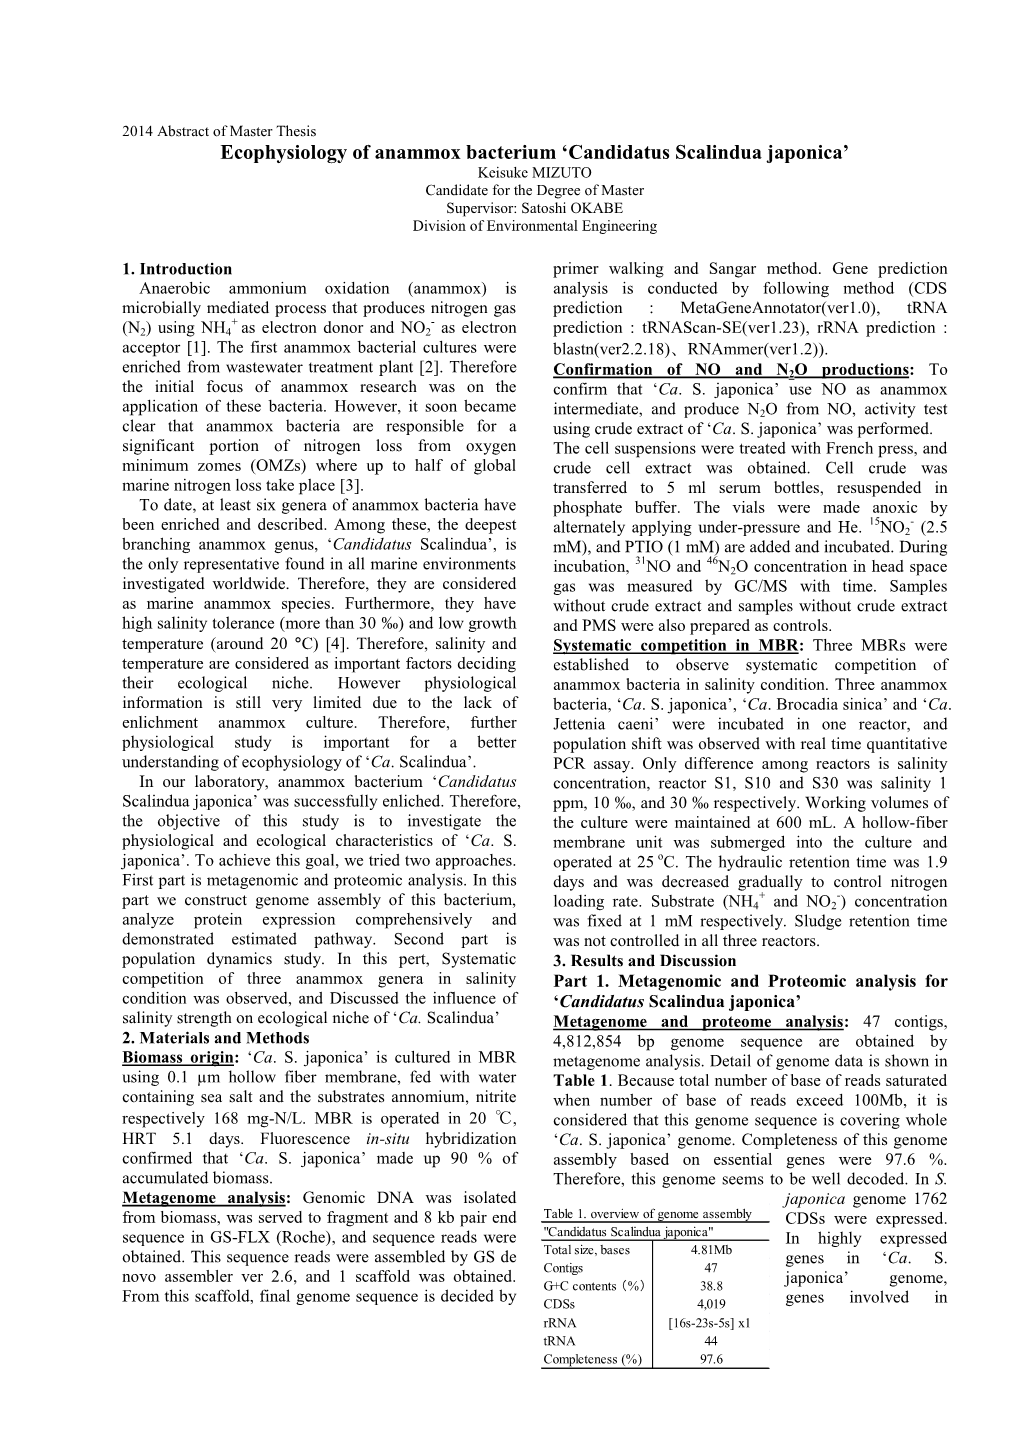 Ecophysiology of Anammox Bacterium 'Candidatus Scalindua Japonica'